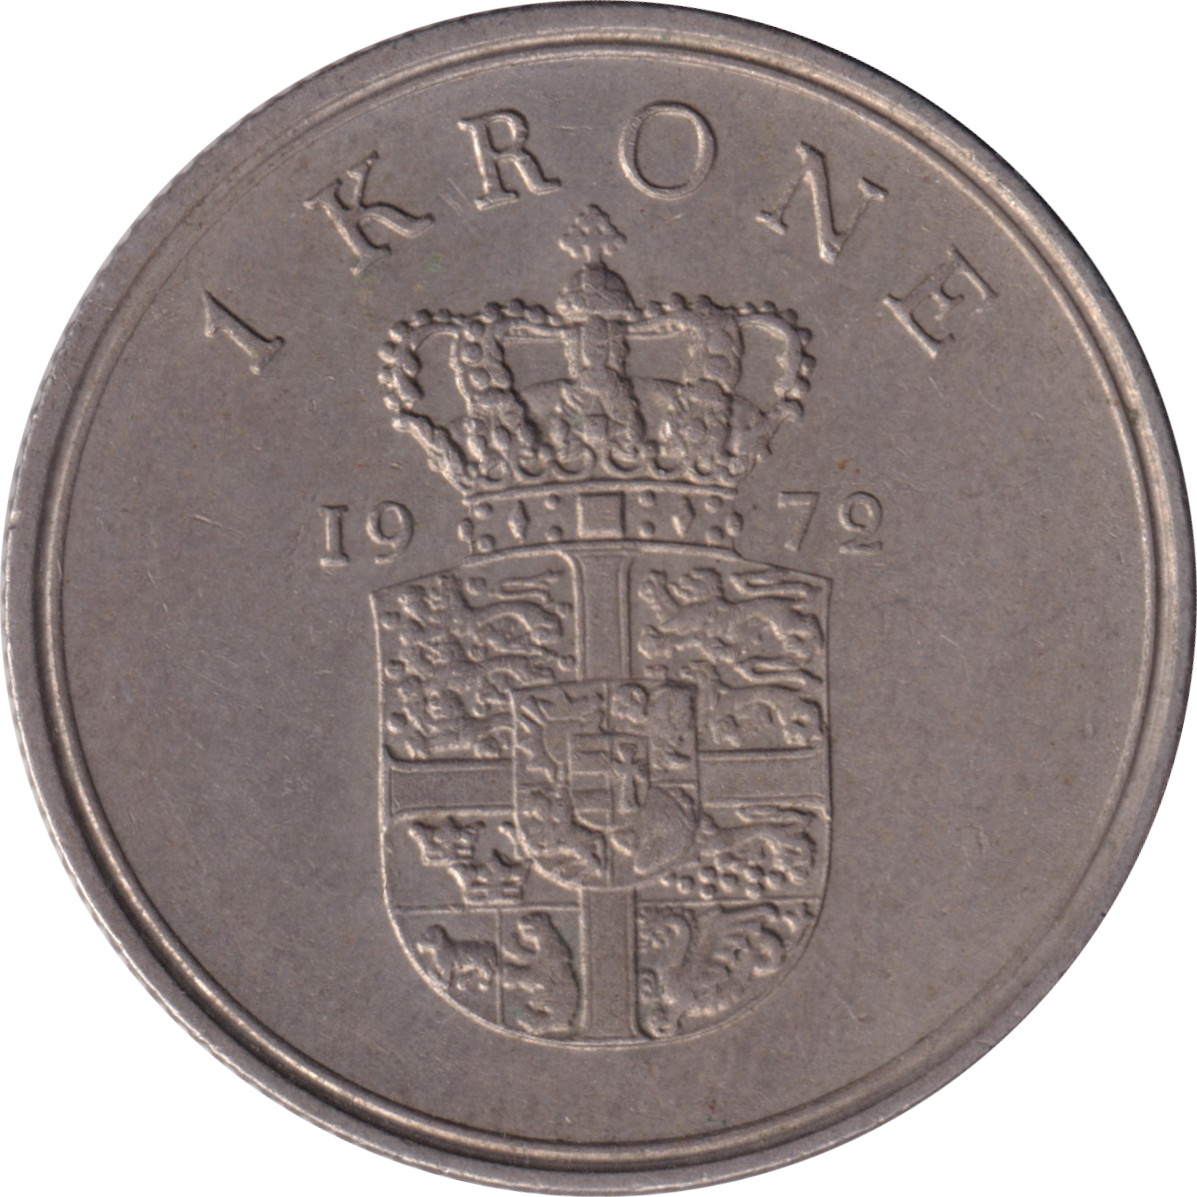 1 krone - Frédéric IX - Tête agée